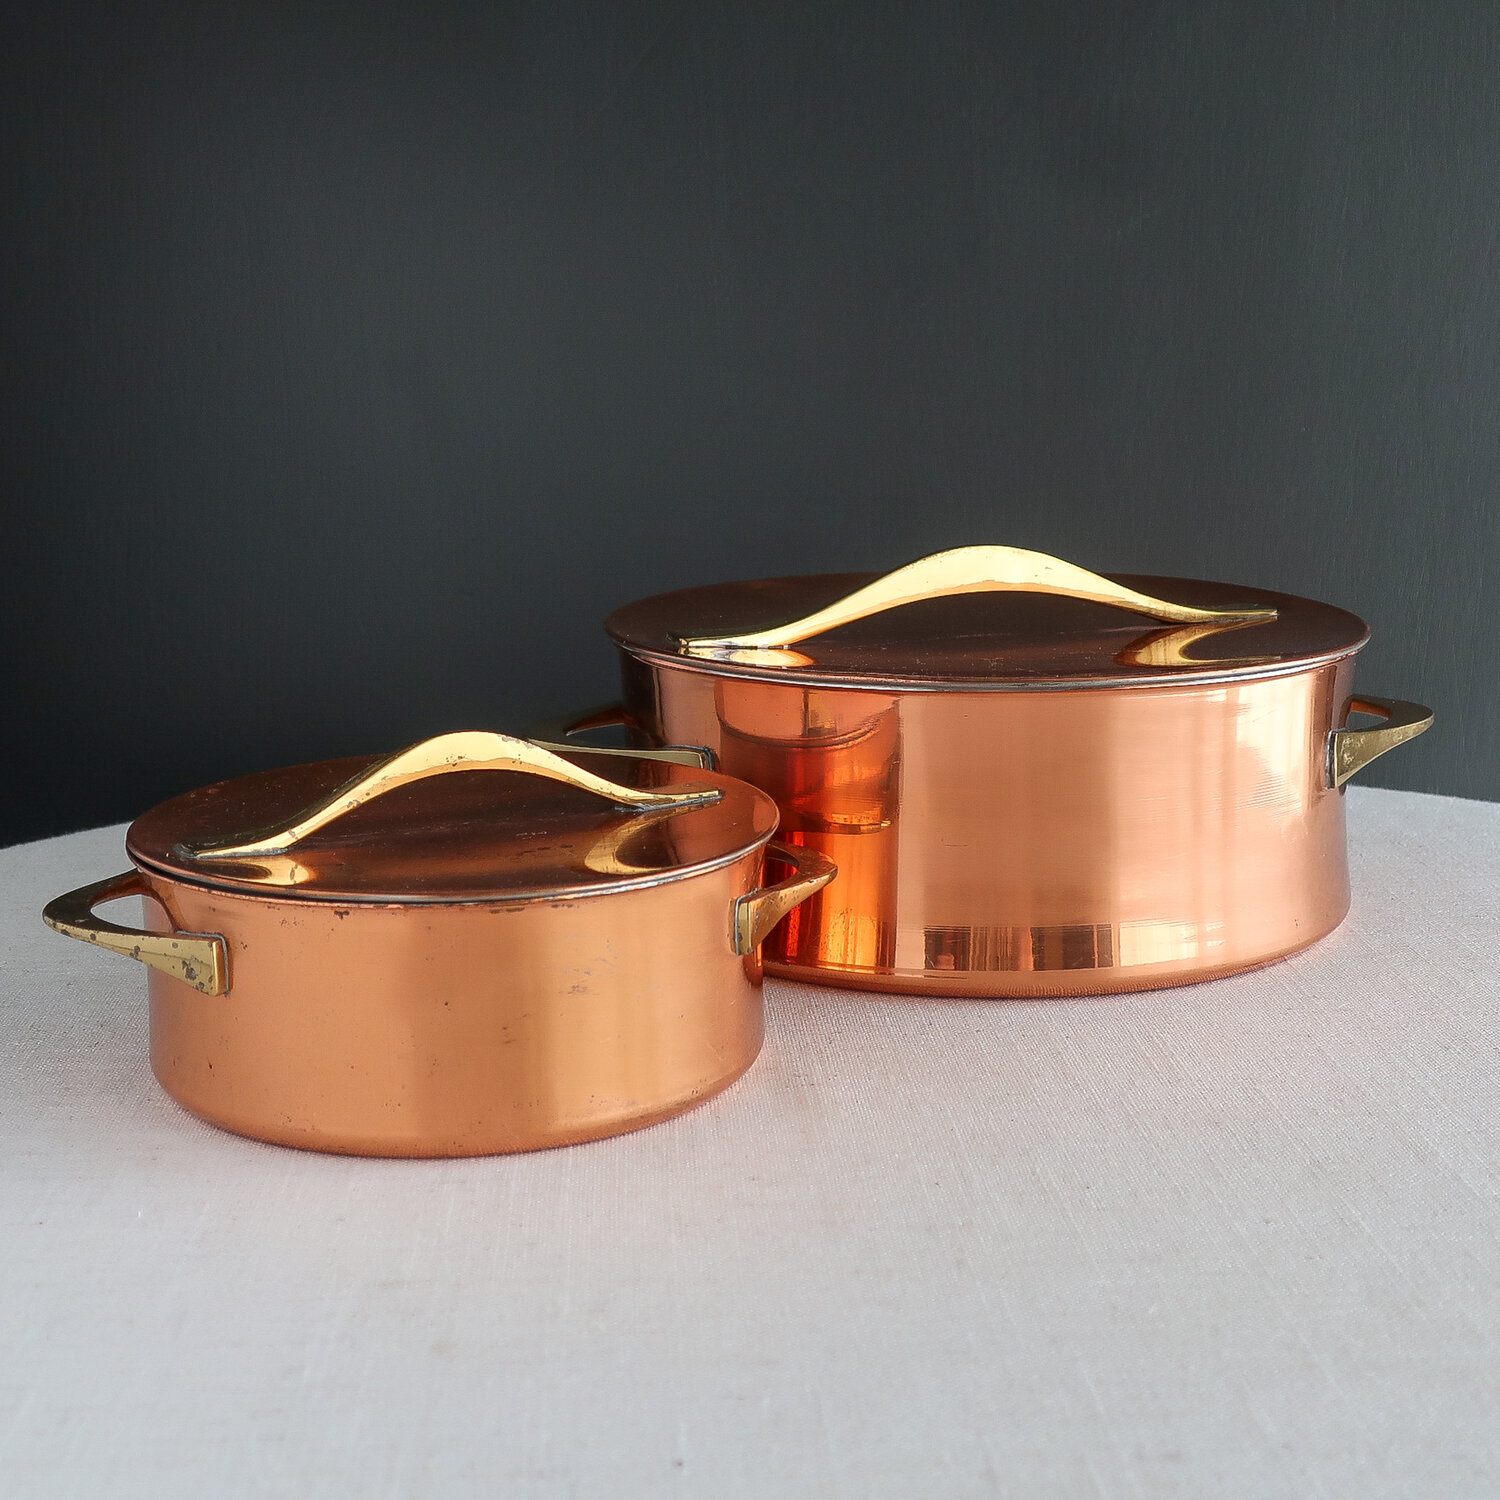 Vintage Dansk Copper Saucepan, circa 1960 - Large 3.5 Quart — Jeni